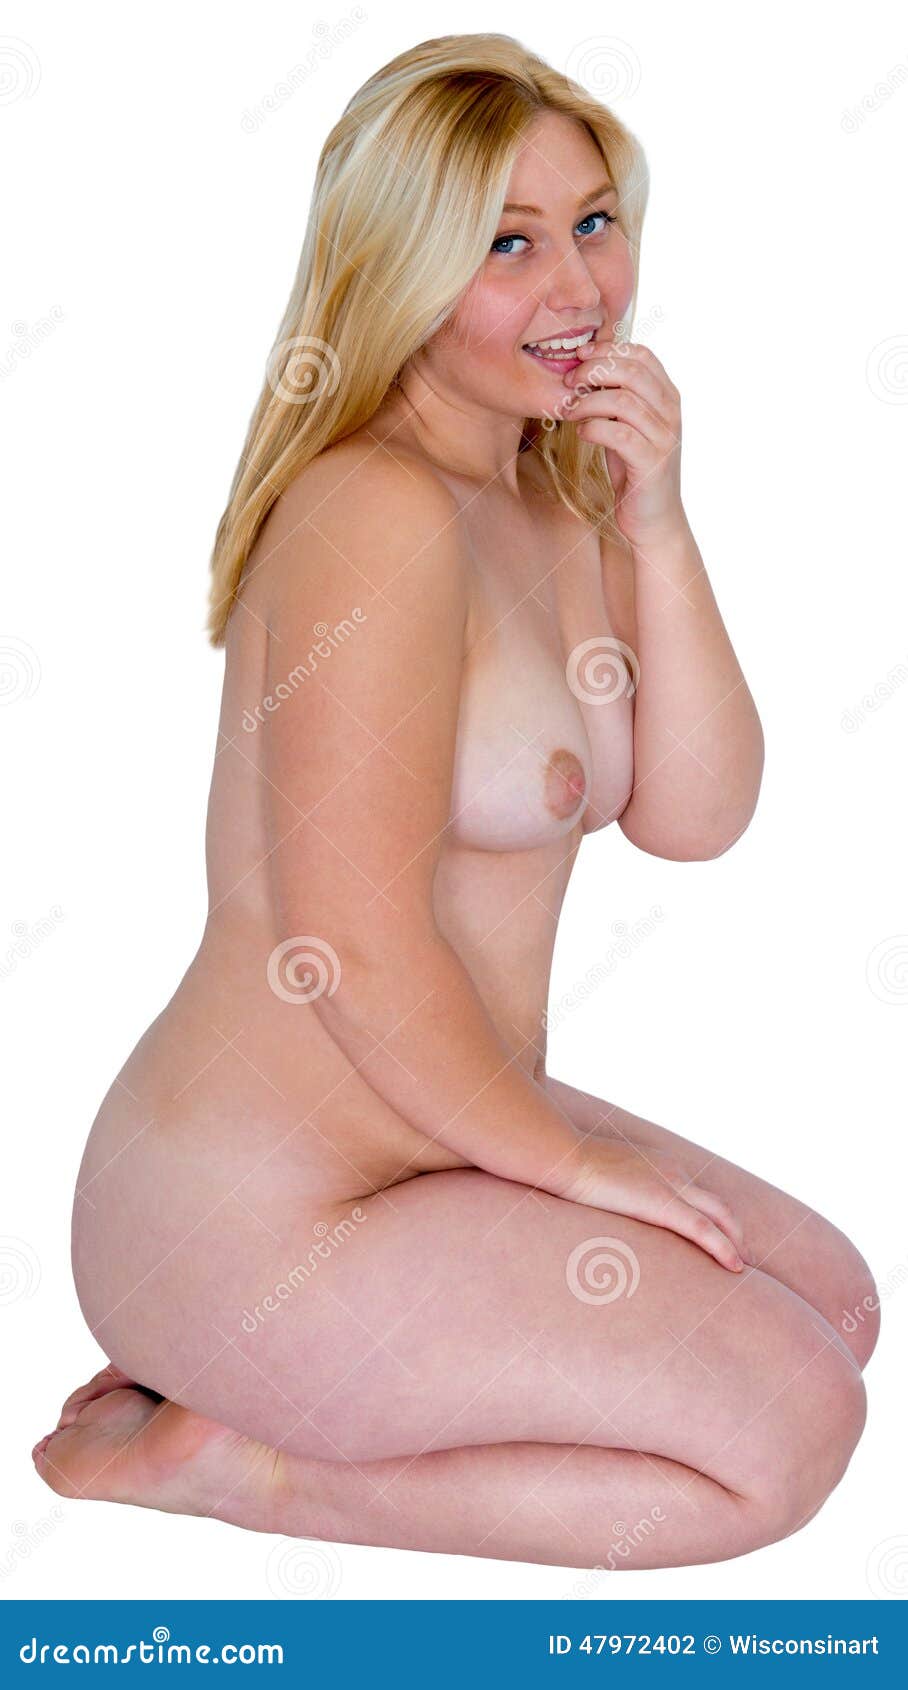 darren towne share nude blonde chicks photos